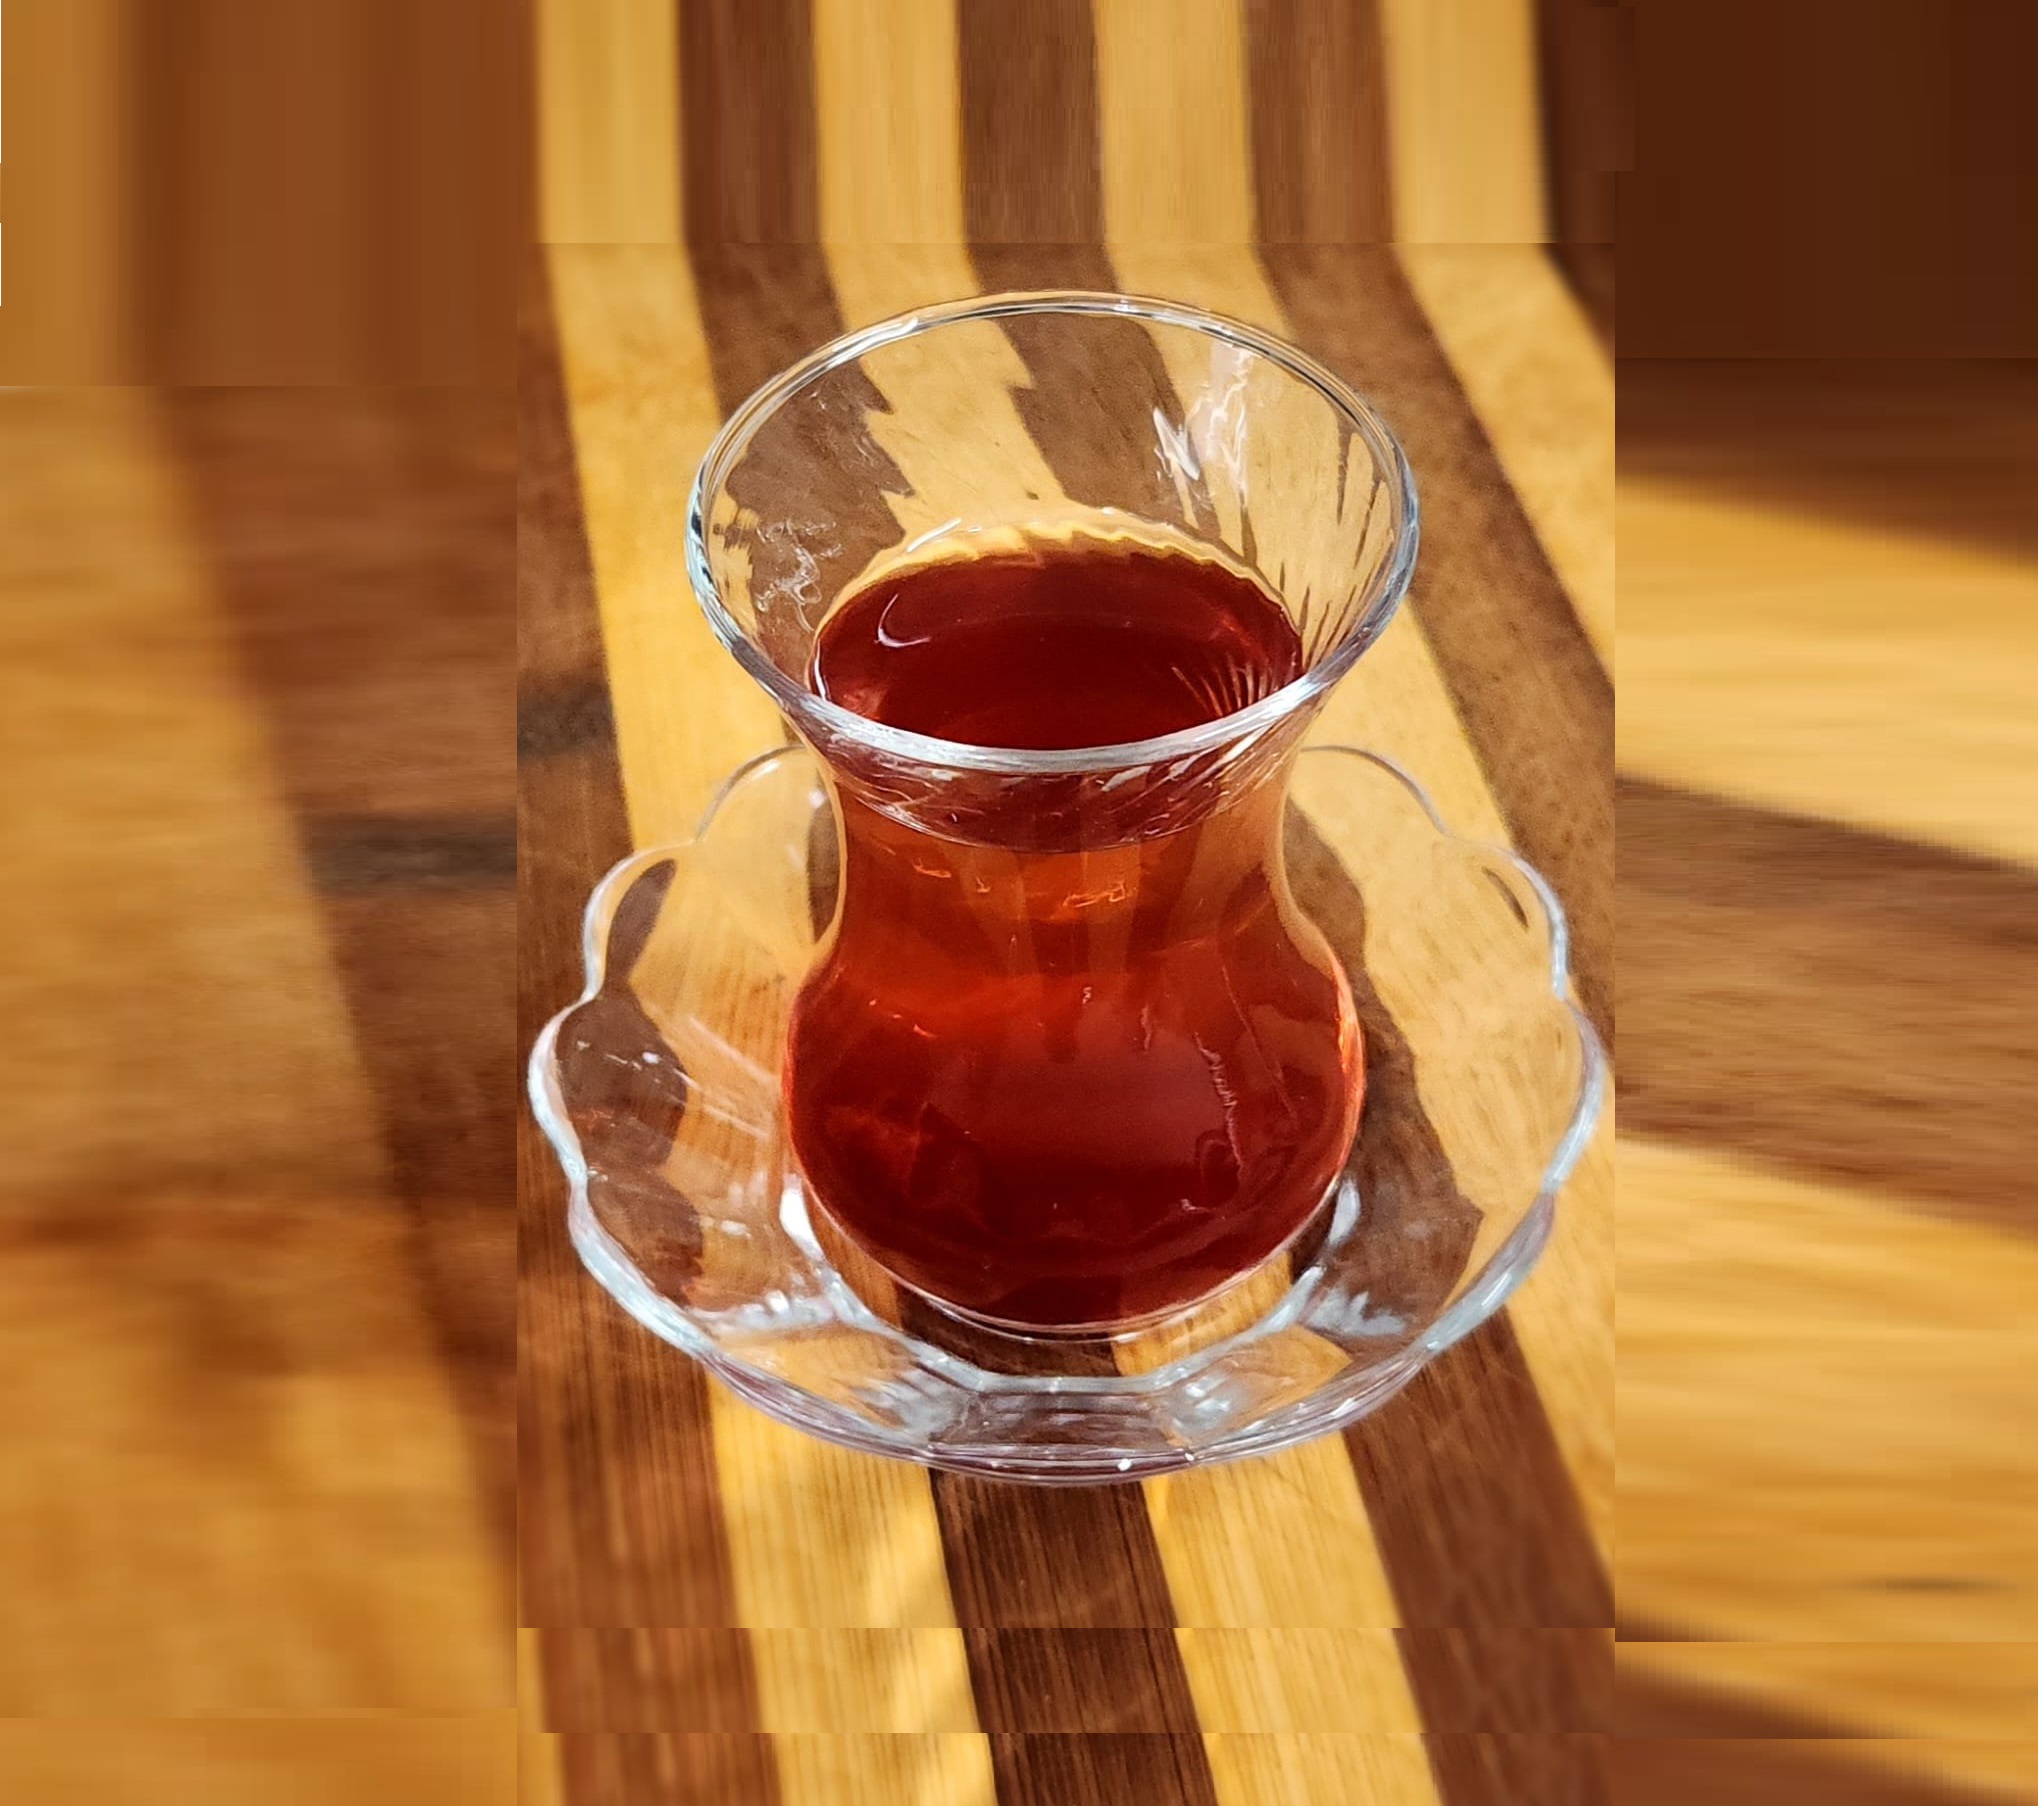 pahare ceai turcesc, pahare originale turcia, pahare ceai din turcia la yena.ro